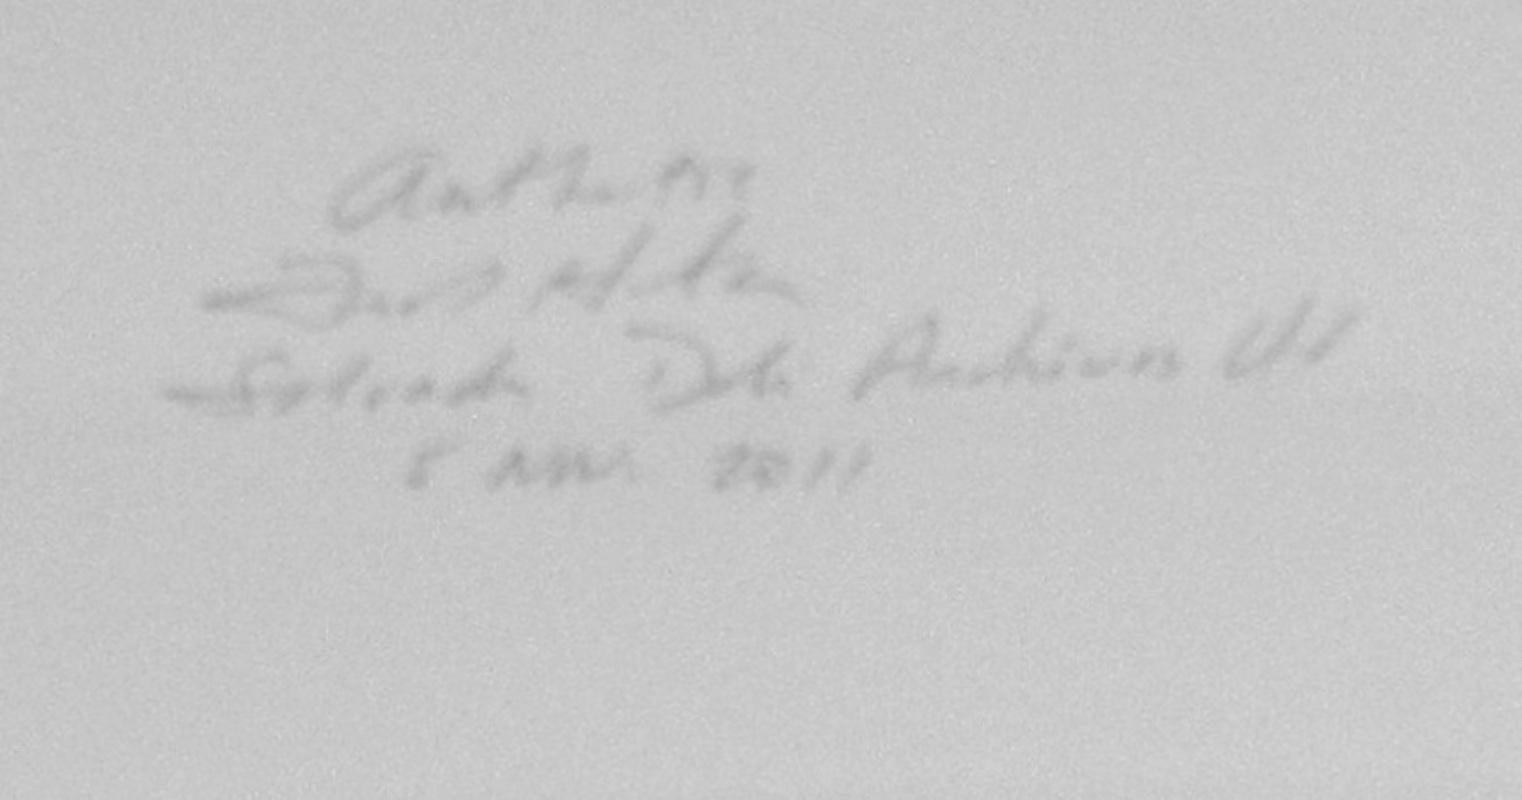 ARTIST: Salvador Dali

TITLE: To Ev'ry Captive Soul

MEDIUM: Etching

SIGNED: Hand Signed 

PUBLISHER: Salvador Dali Archives with Frank Hunter

EDITION NUMBER: 33/200

MEASUREMENTS: 15